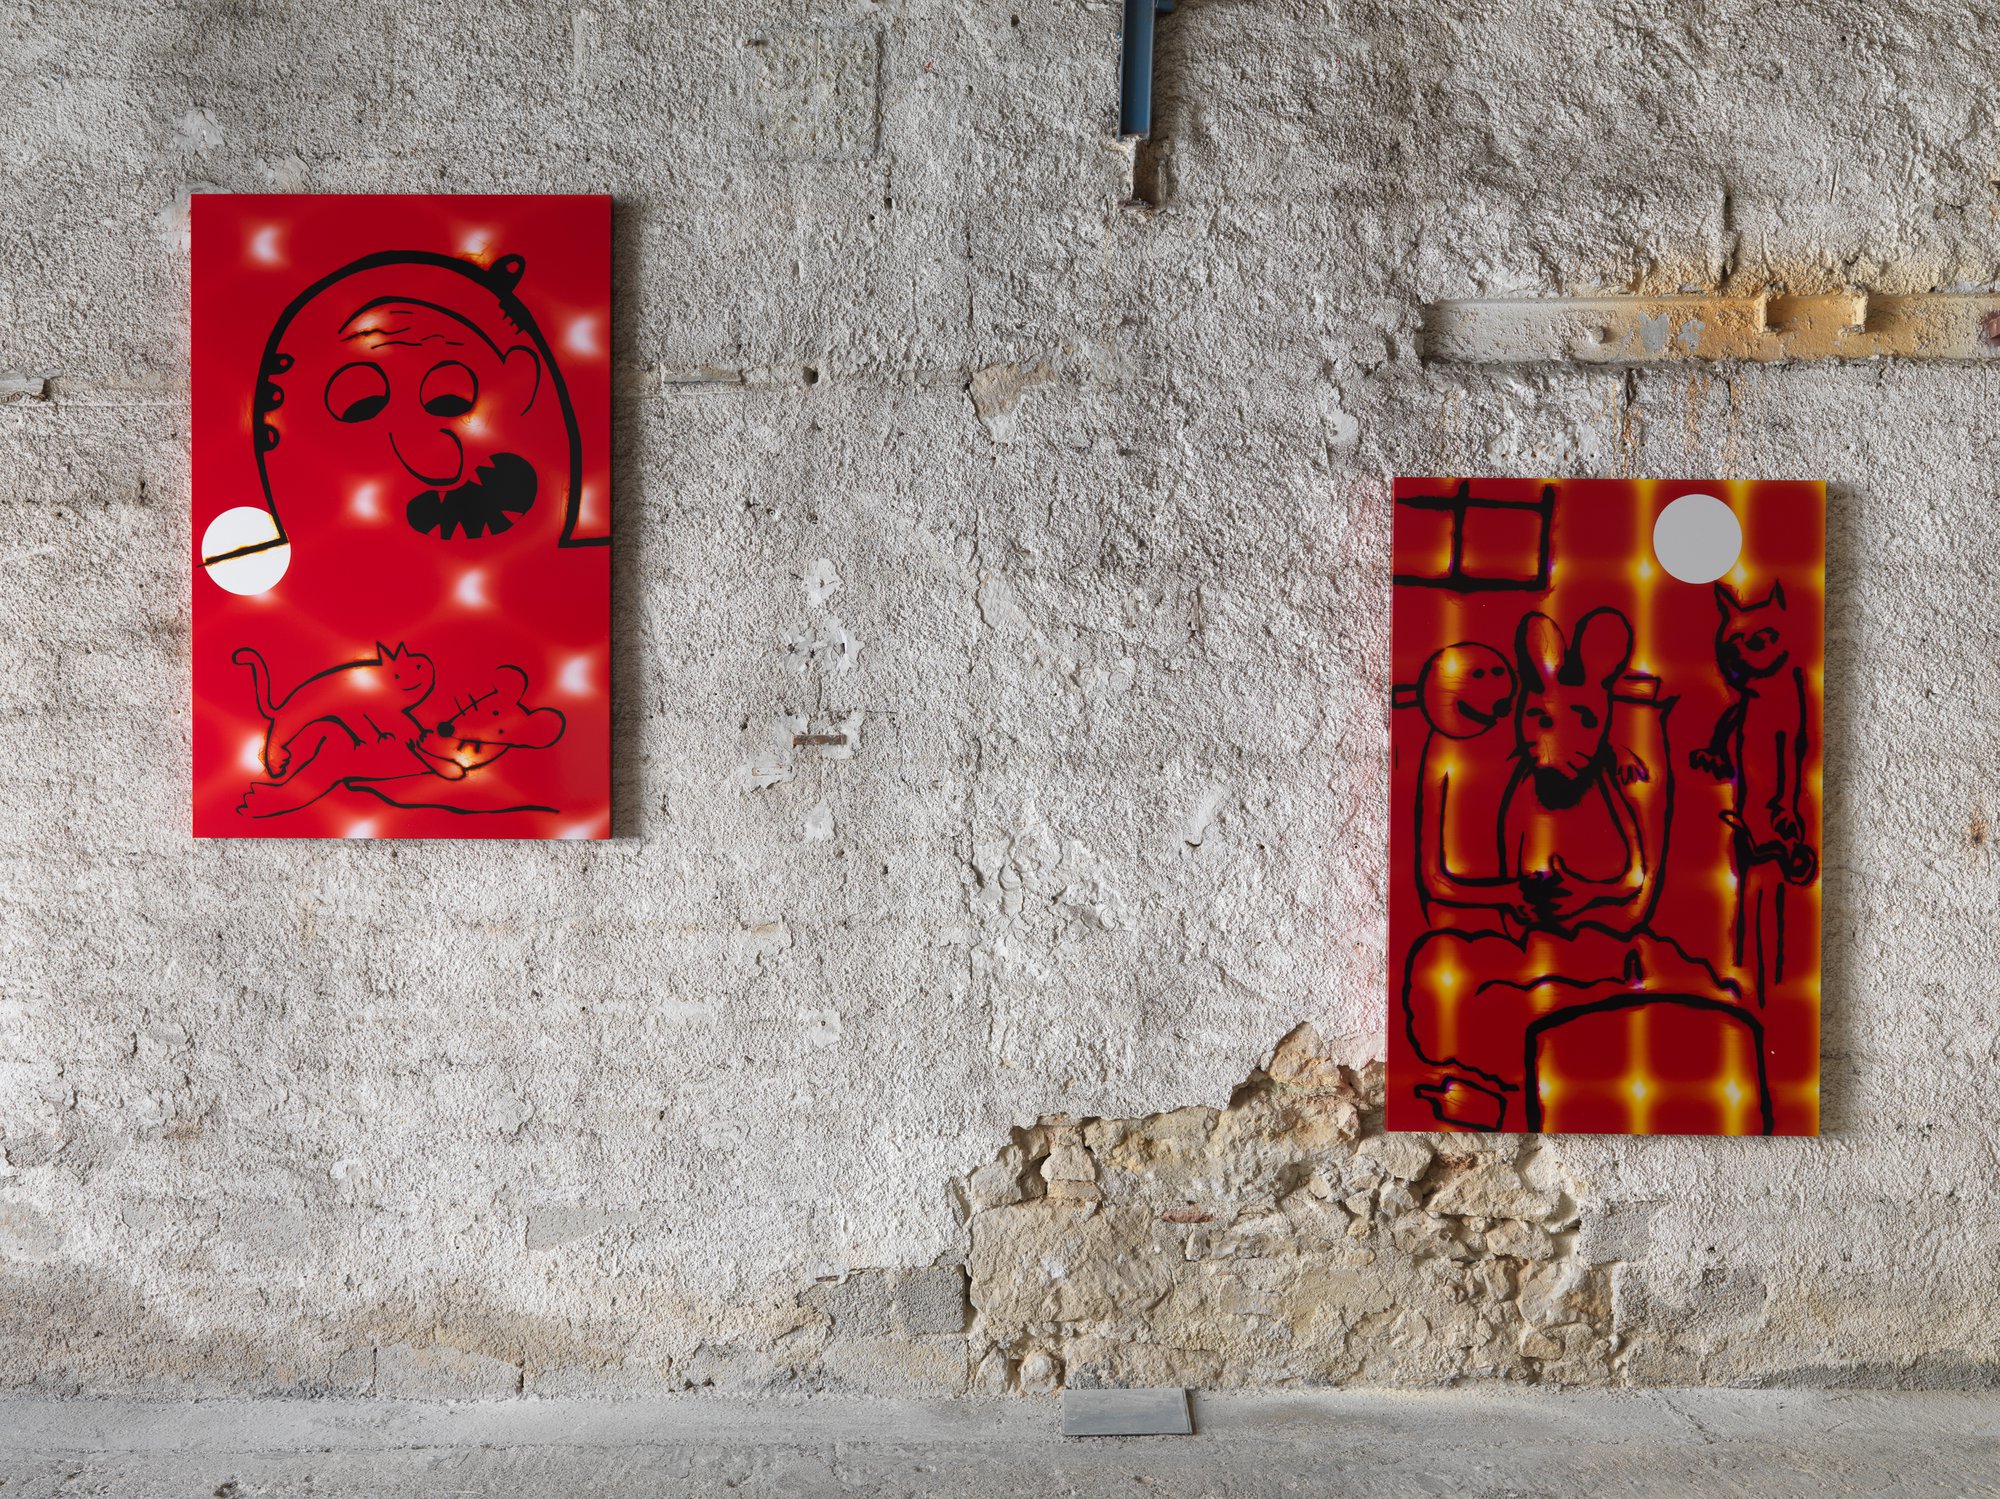 Installation view, Hadi Fallahpisheh, Young and Clueless, Rodeo, Piraeus, 2021